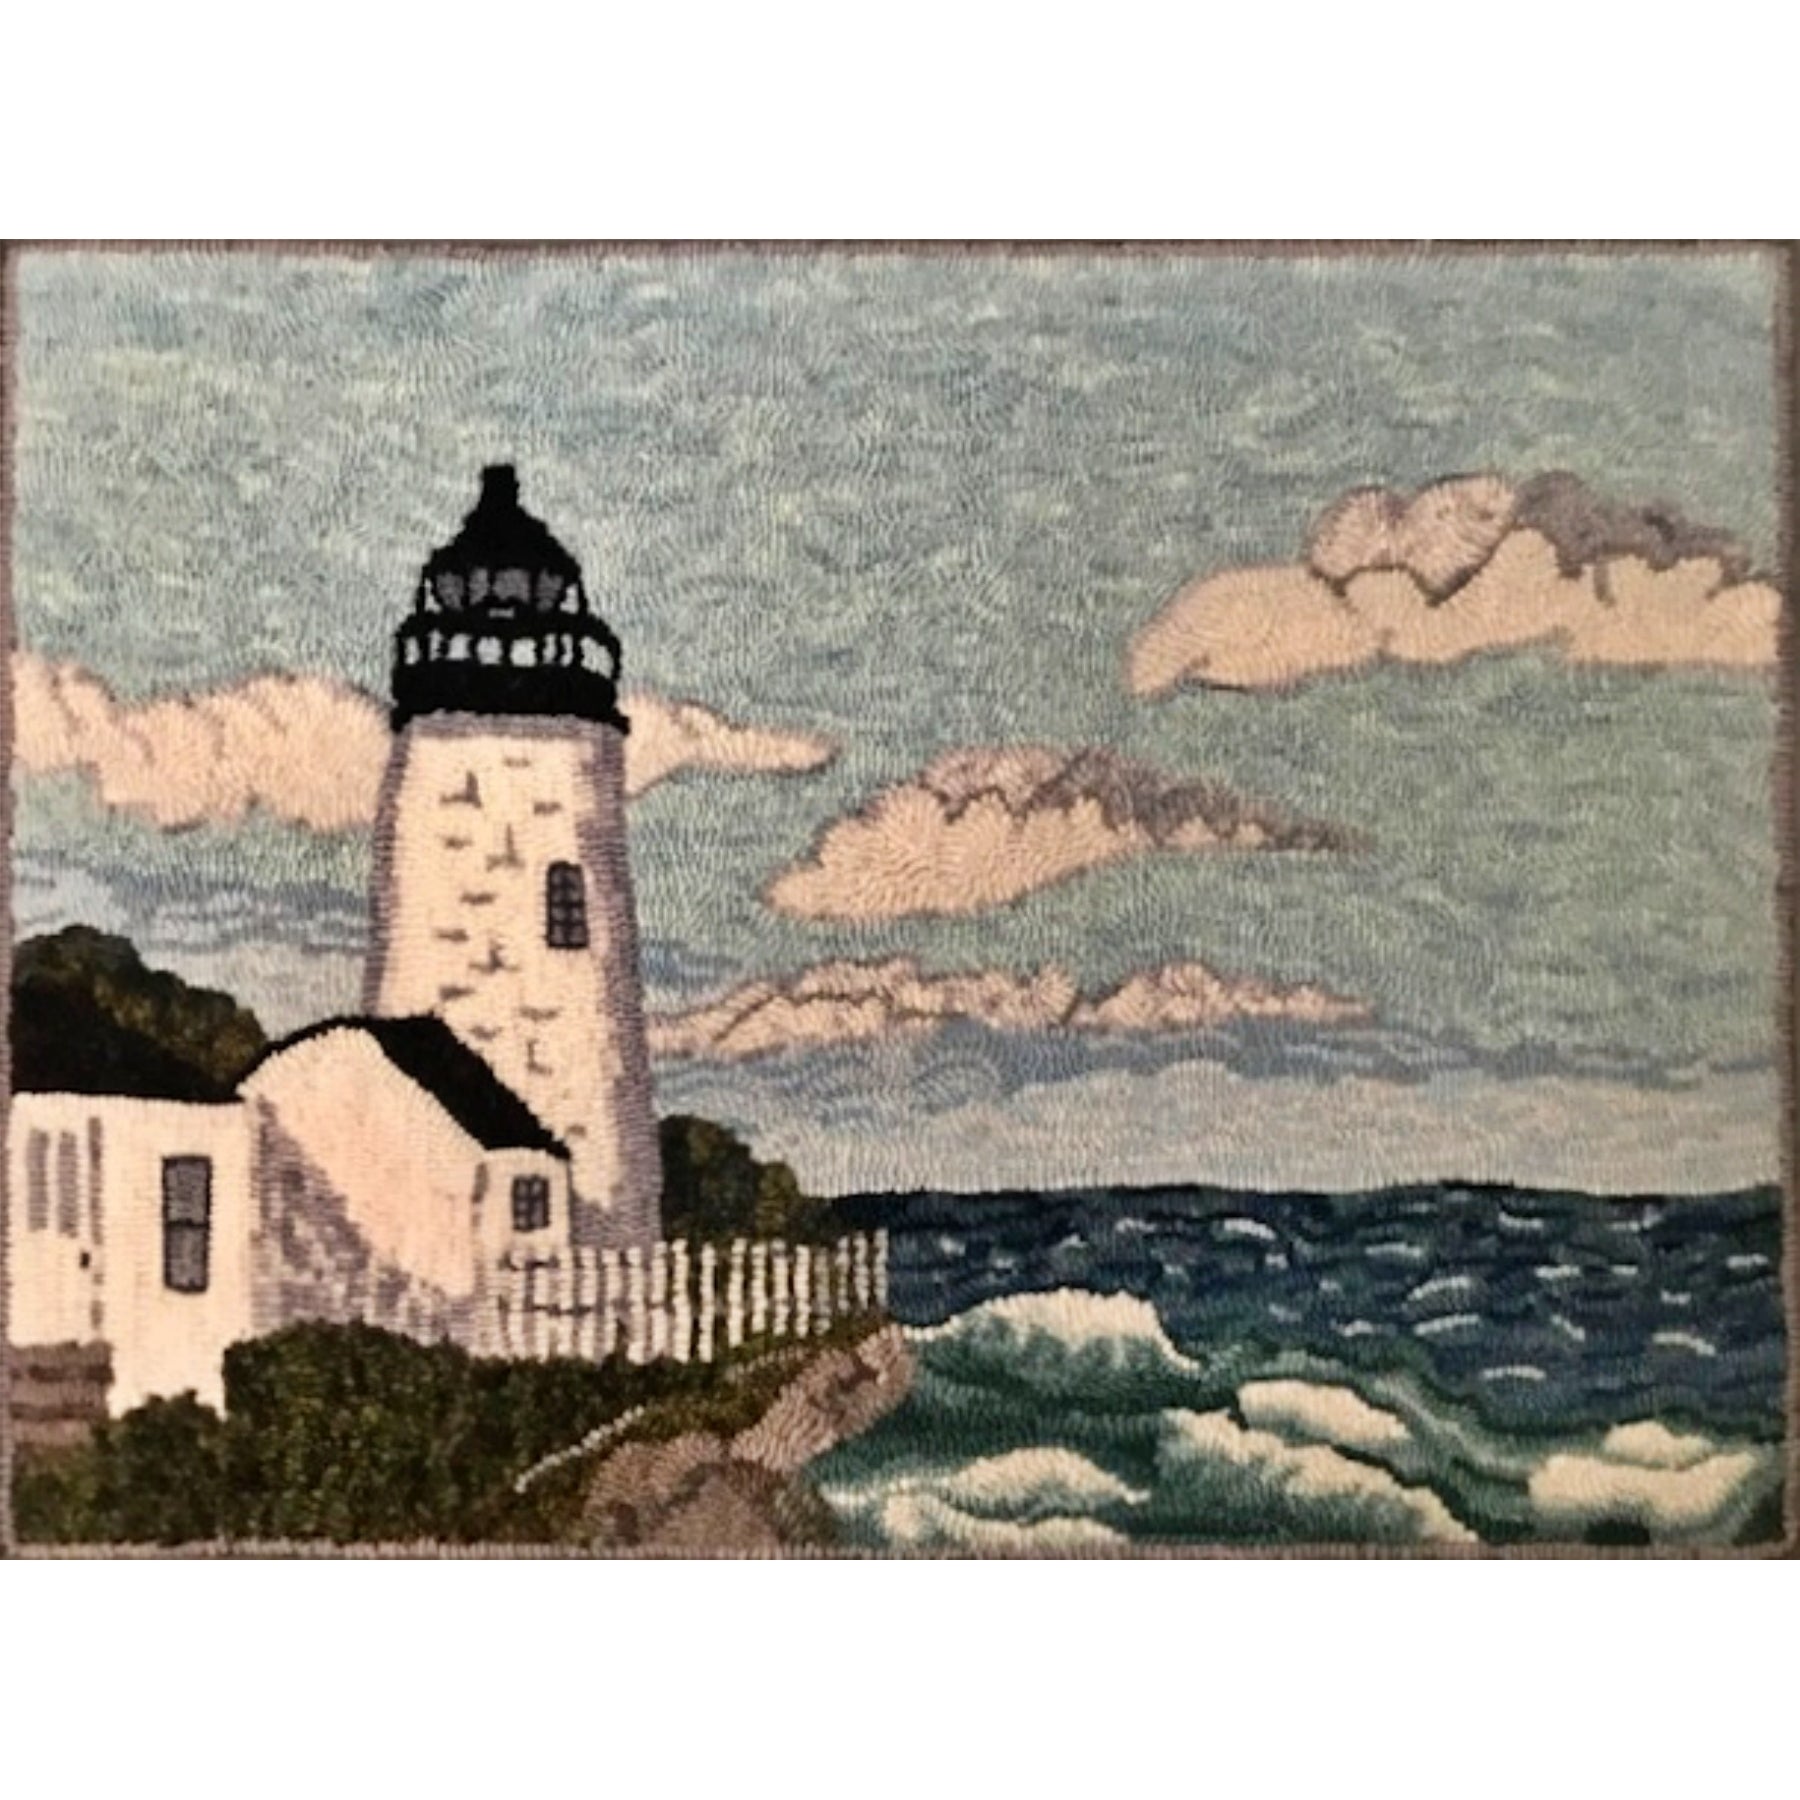 Pemaquid Light House, rug hooked by Linda Cooney